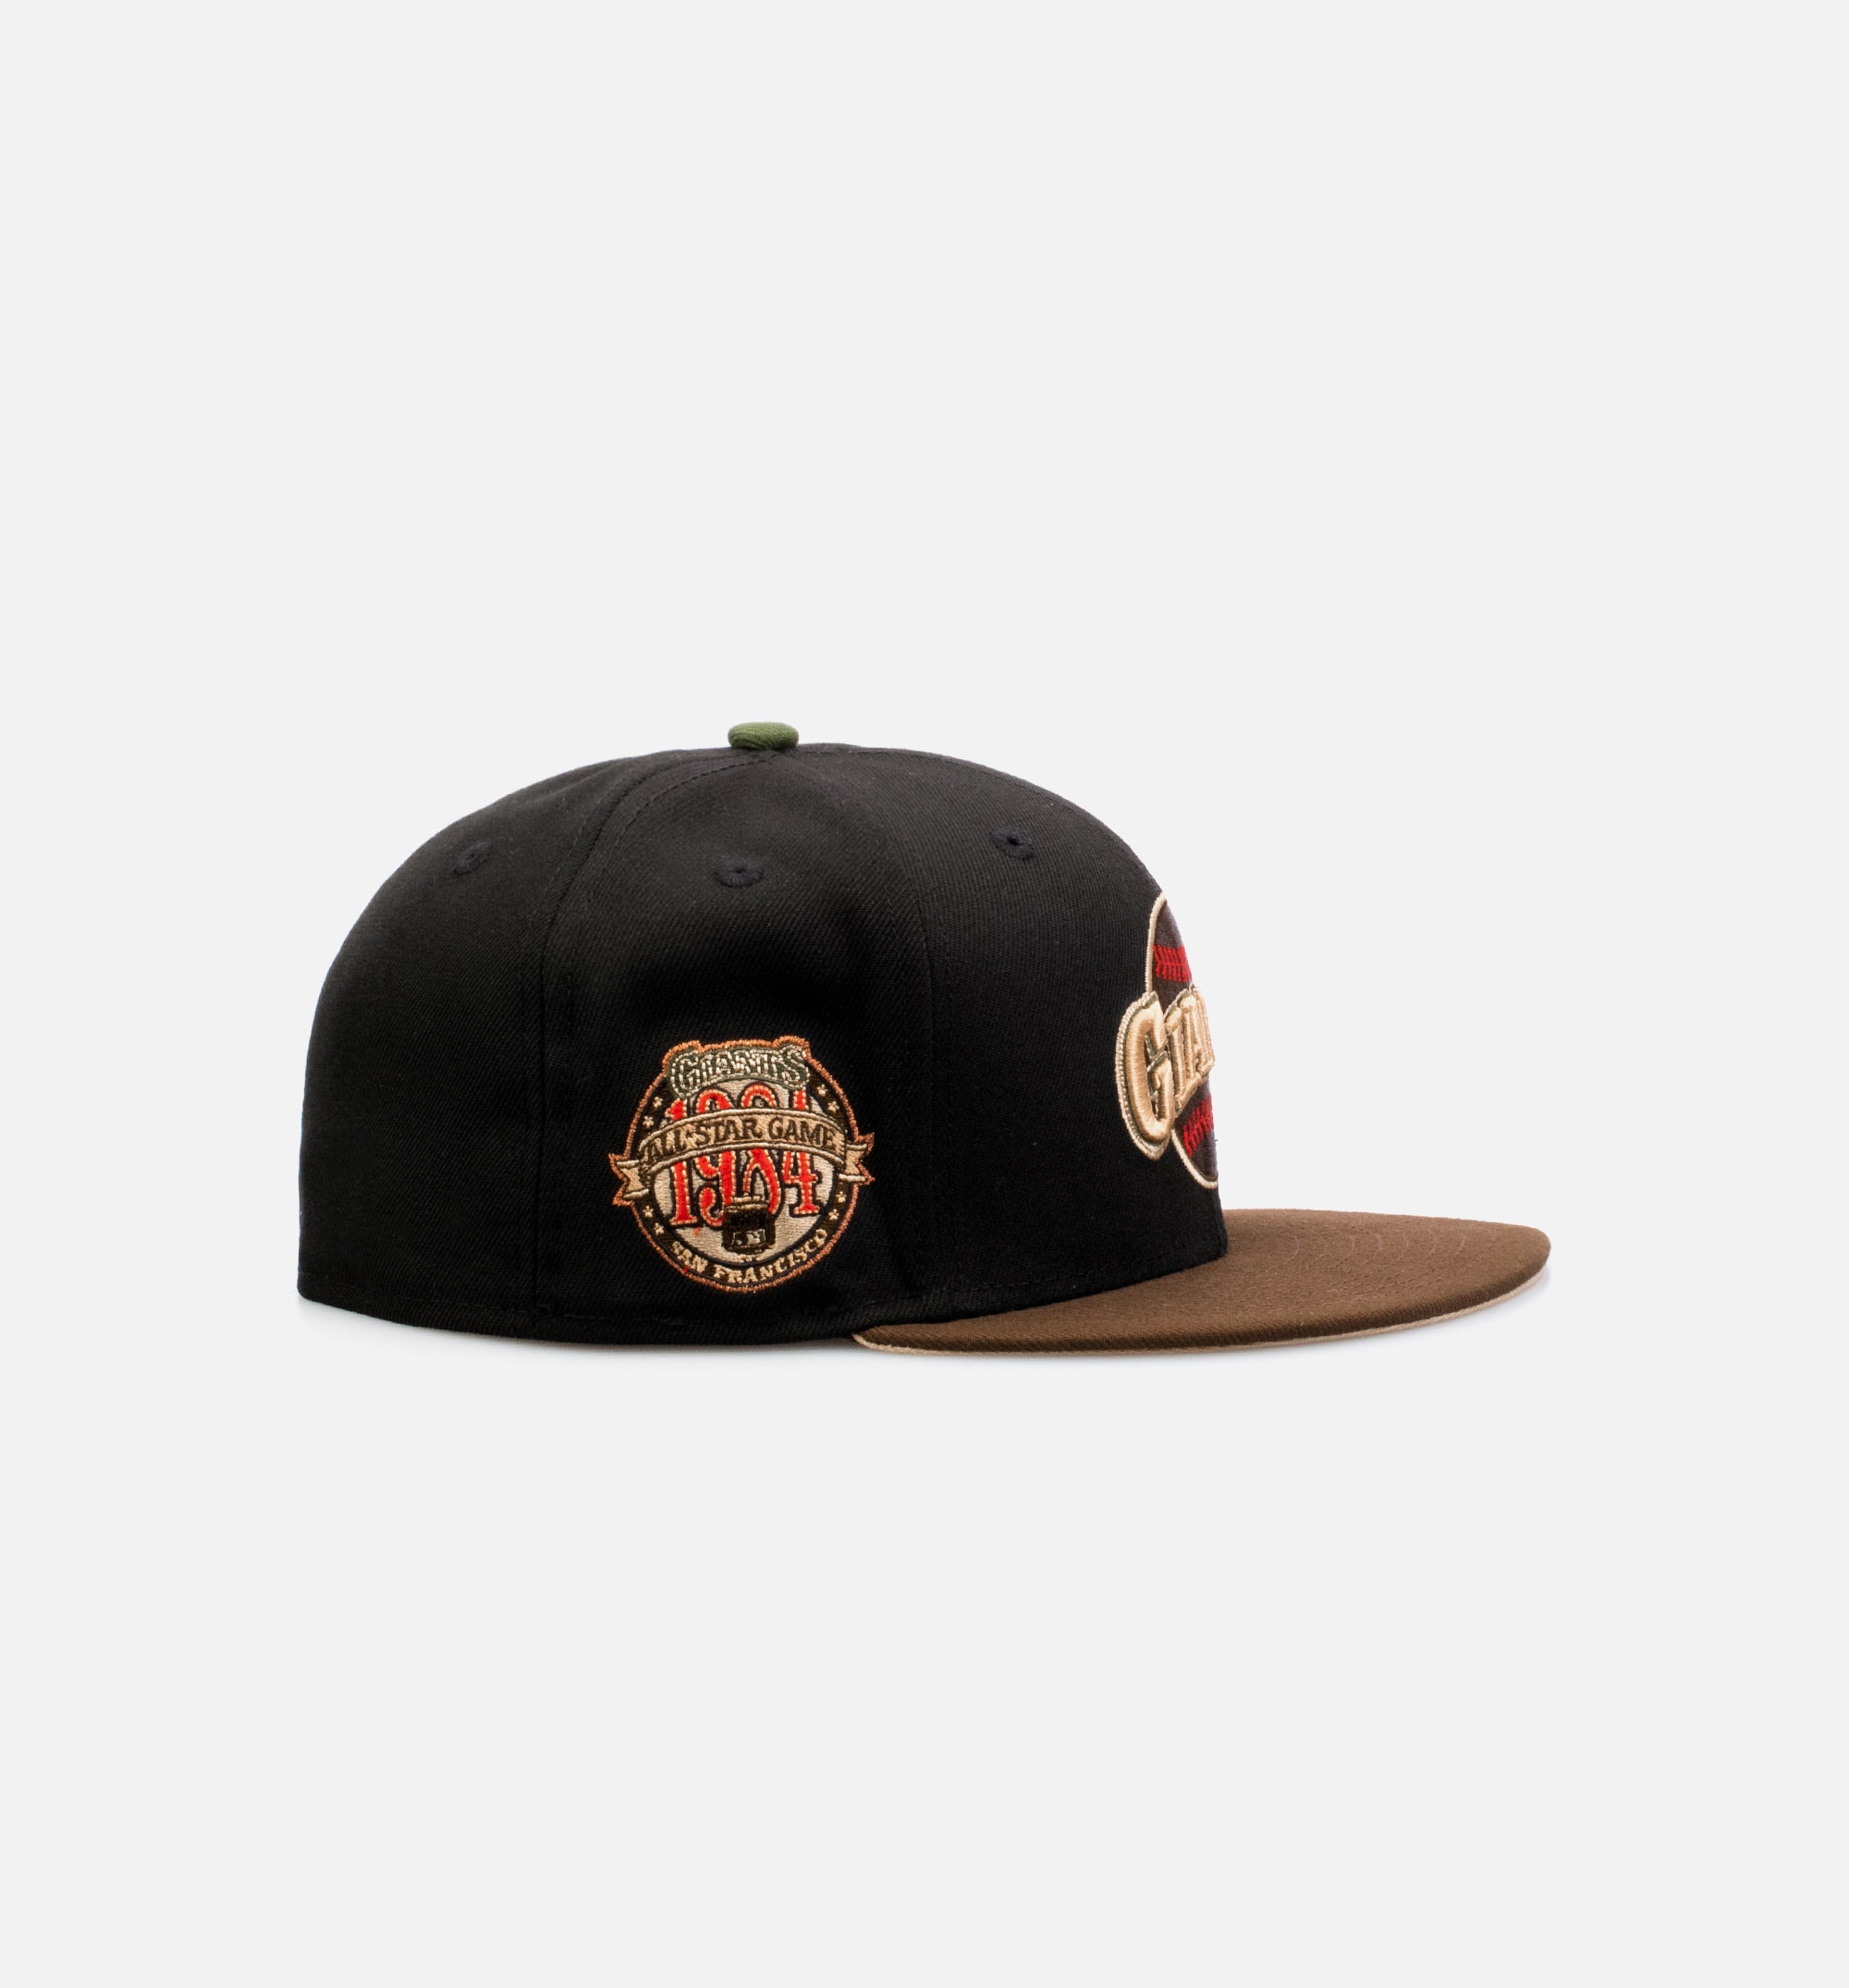 Men's Fanatics Branded Khaki/Brown San Francisco Giants Side Patch Snapback Hat